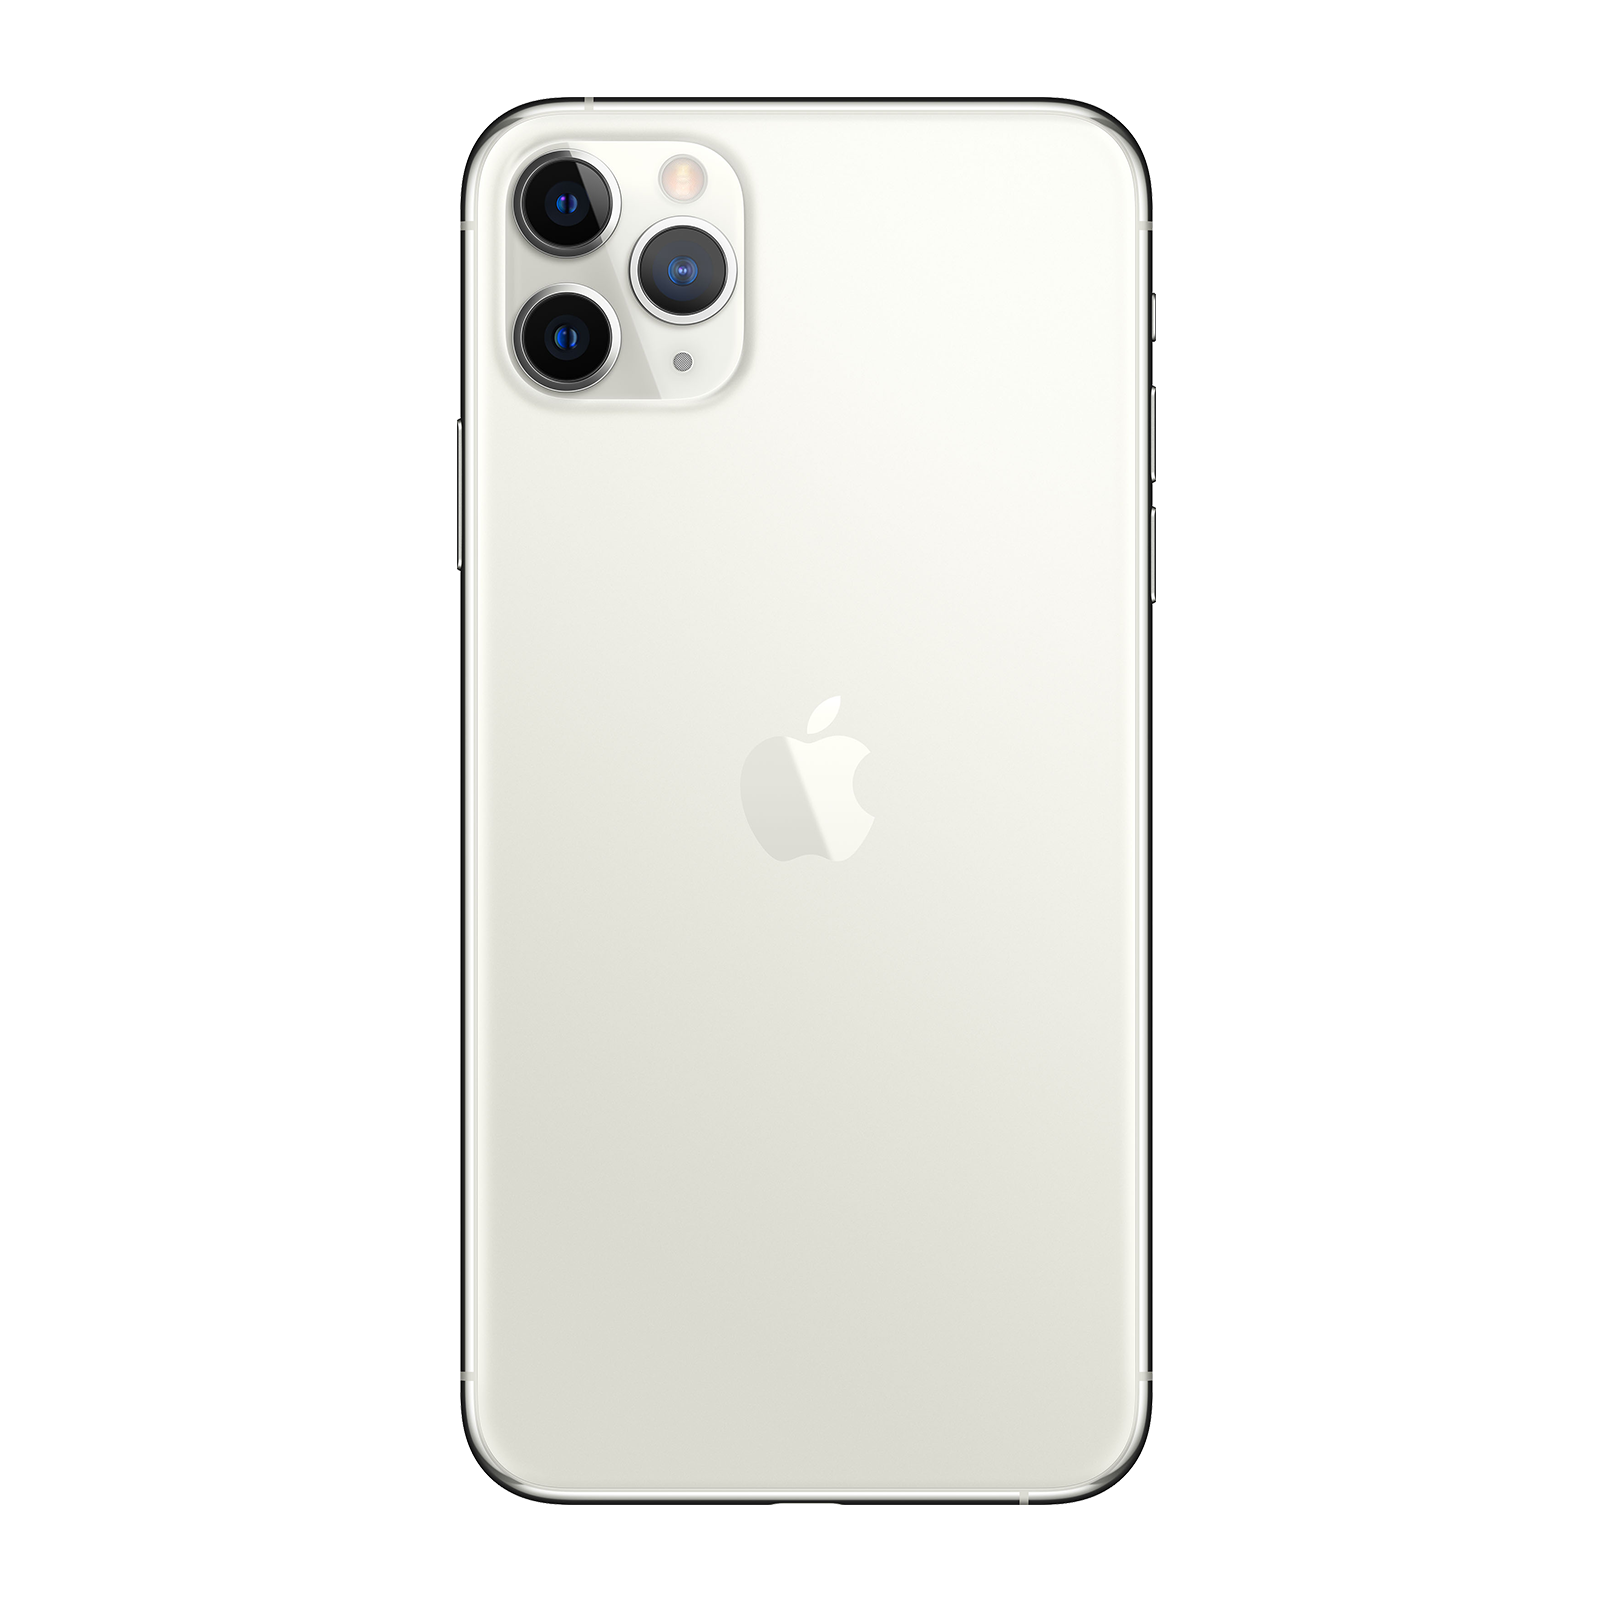 Apple iPhone 11 Pro 64GB Silver Very Good - Unlocked